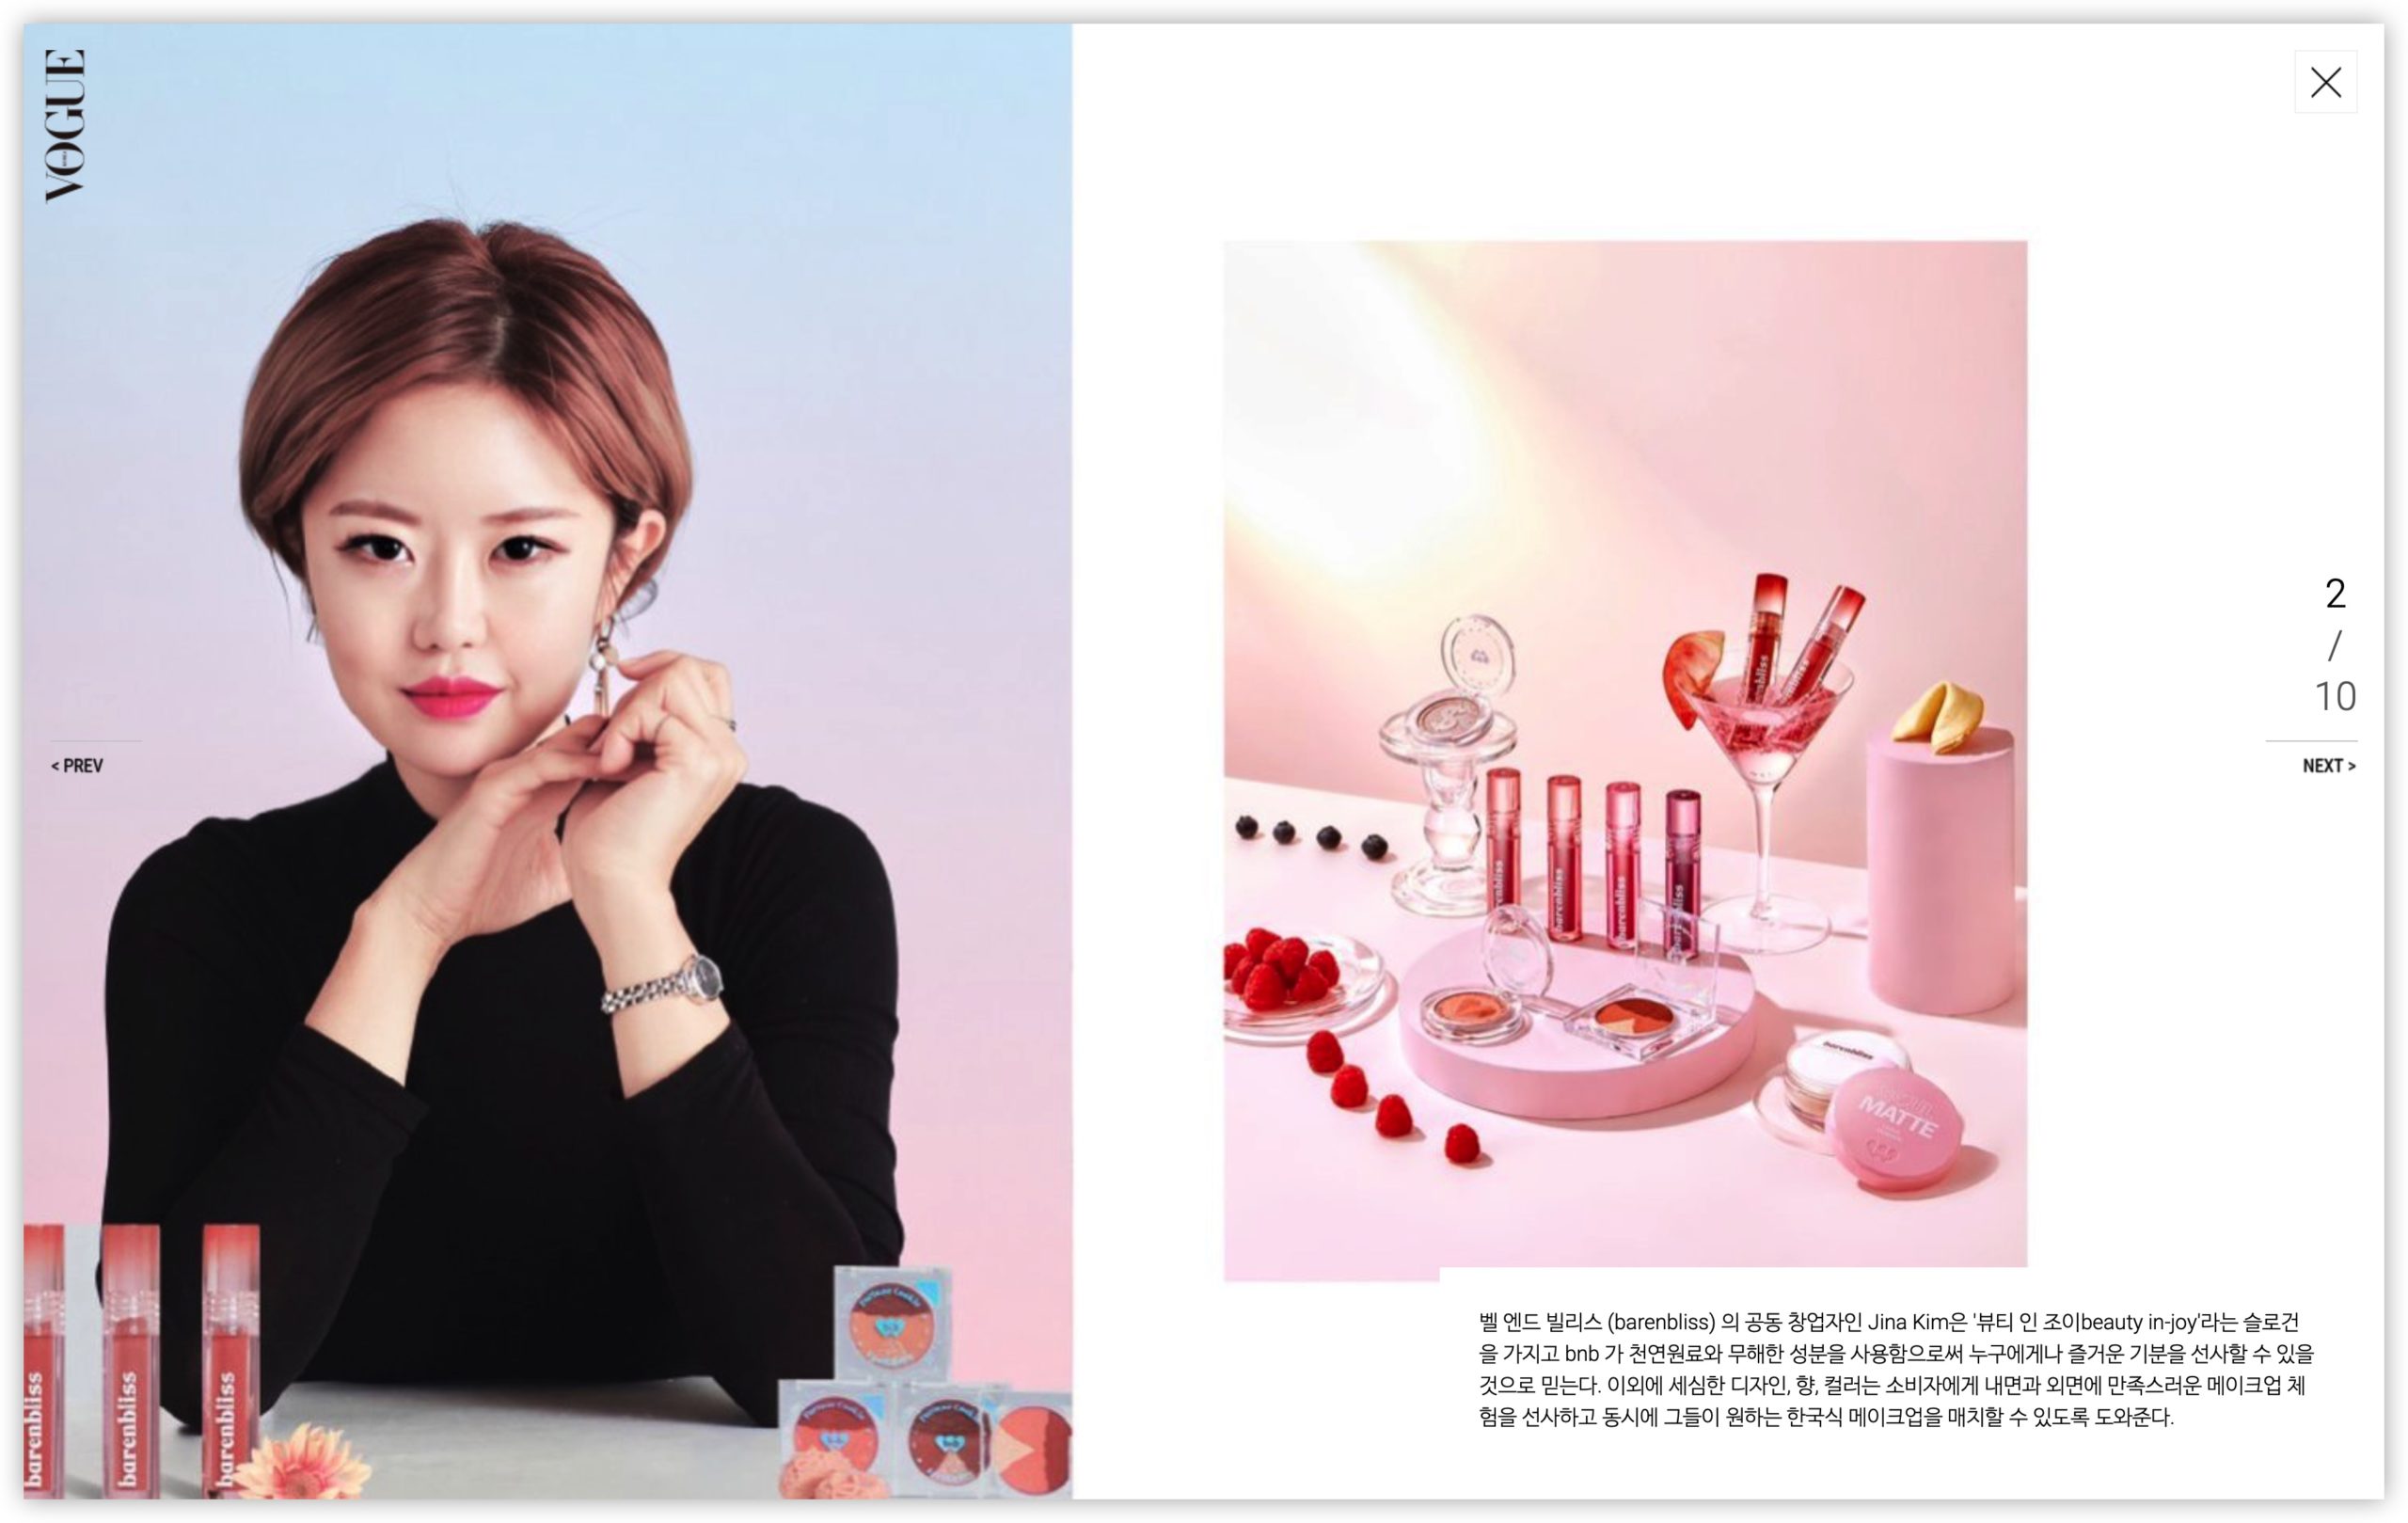 Korean beauty brand Barenbliss True Beauty Inside Cushion Jina Kim